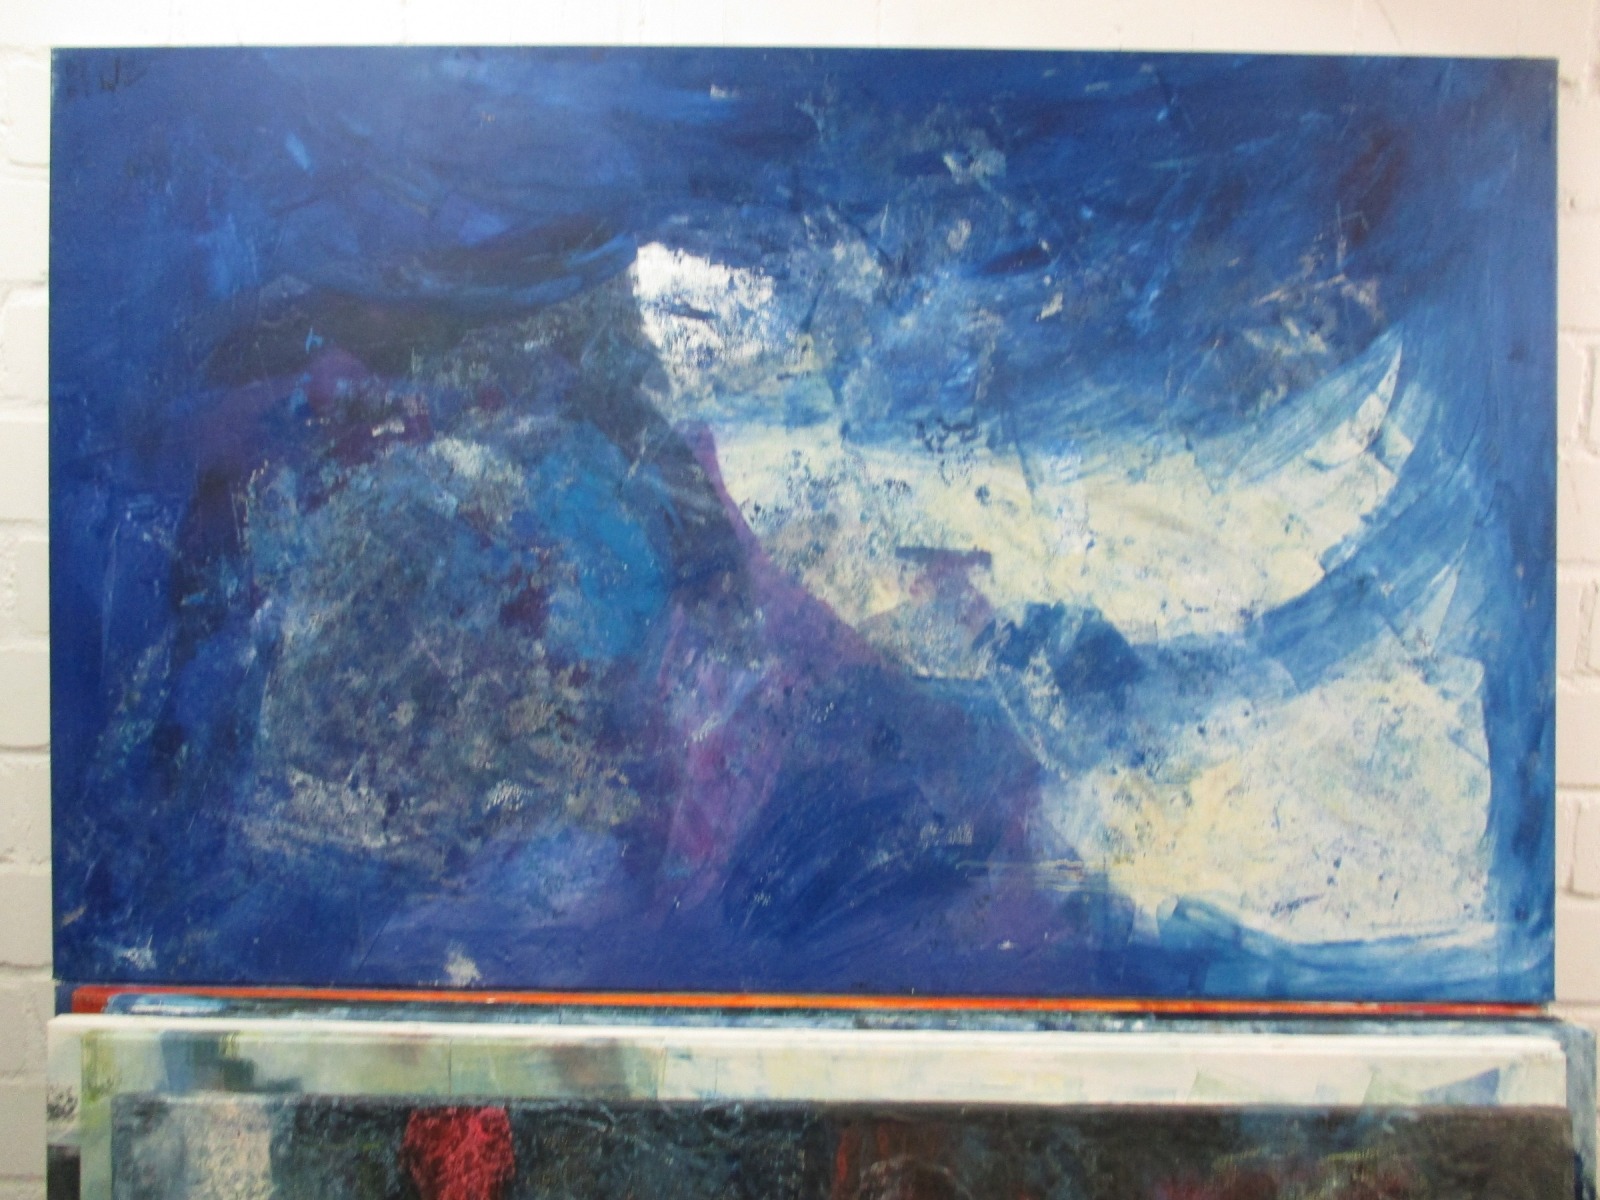 blue xl- oil Painting, Art, abstract, Canvas, Original by Sonja Zeltner-Müller 2